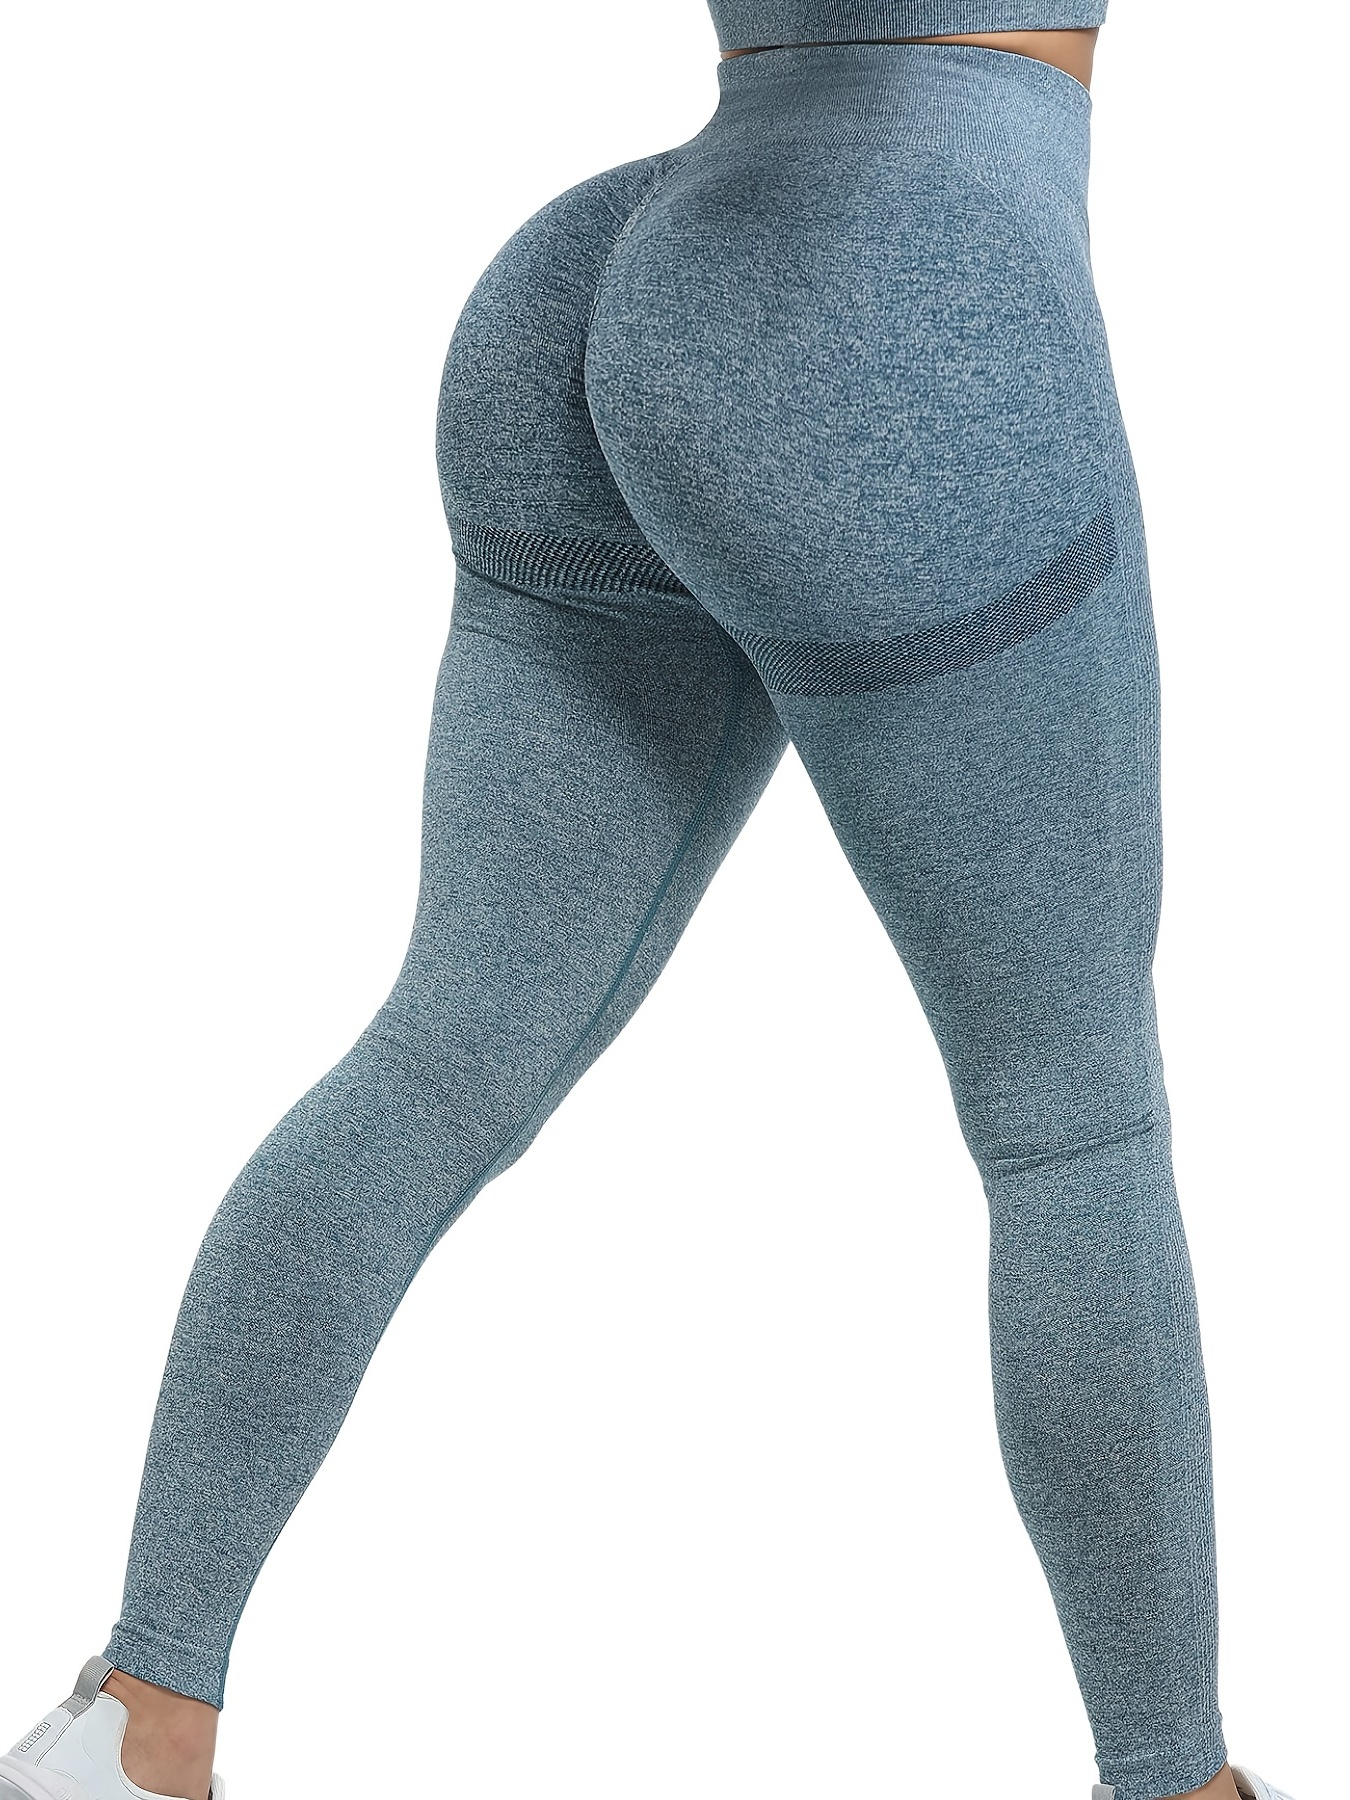 Scrunch Bum Leggings for Women | Butt Lifting Yoga Pants